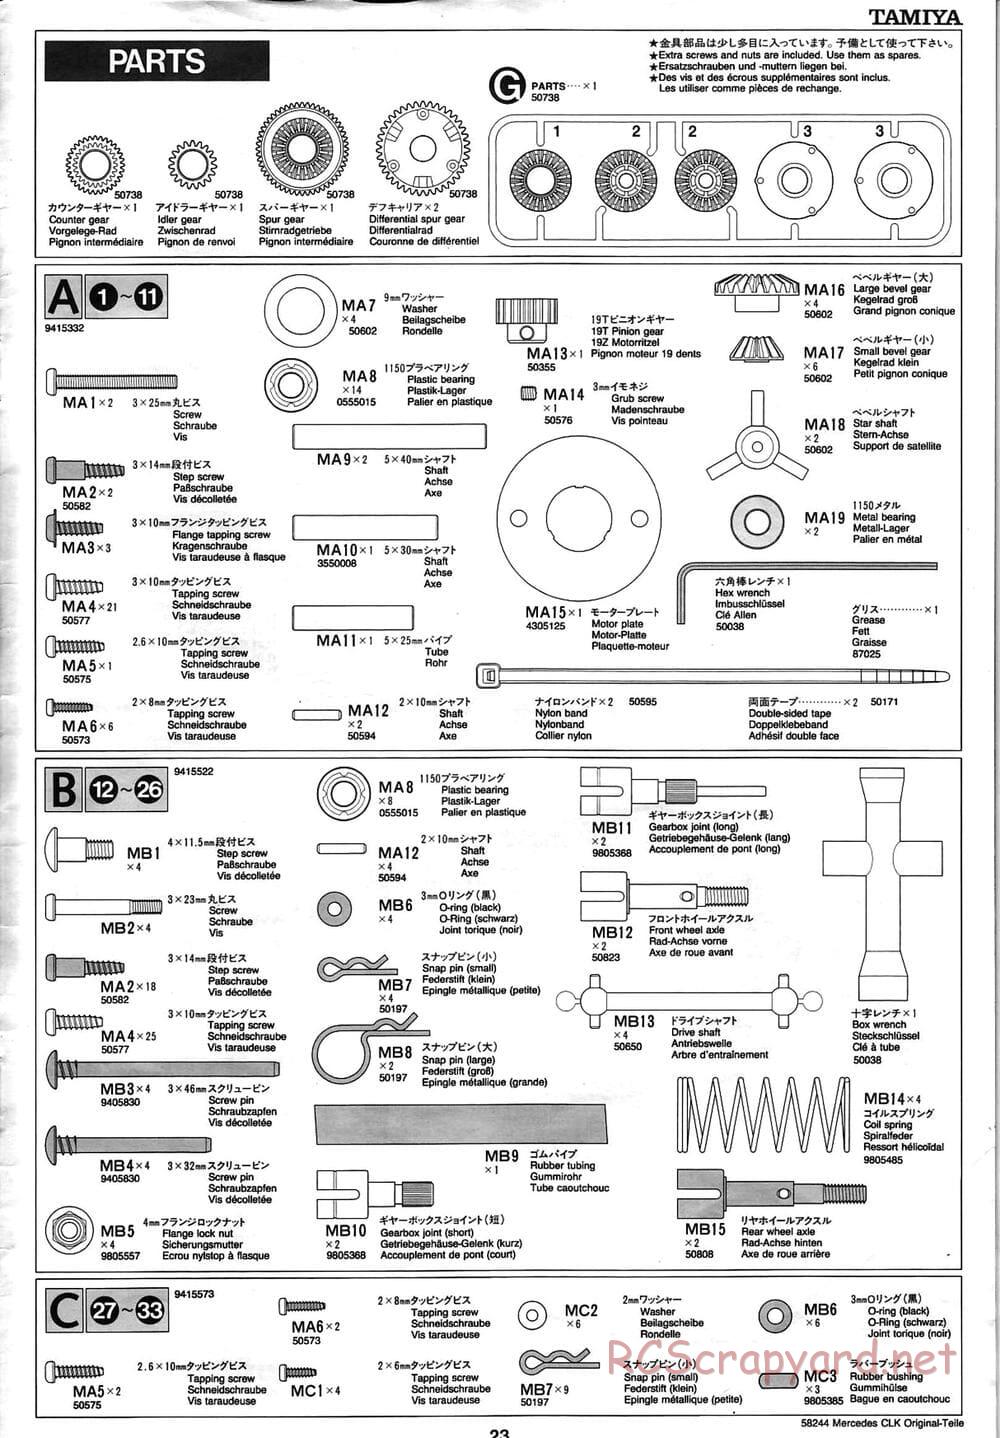 Tamiya - Mercedes CLK-GTR Original-Teile - TL-01 Chassis - Manual - Page 23